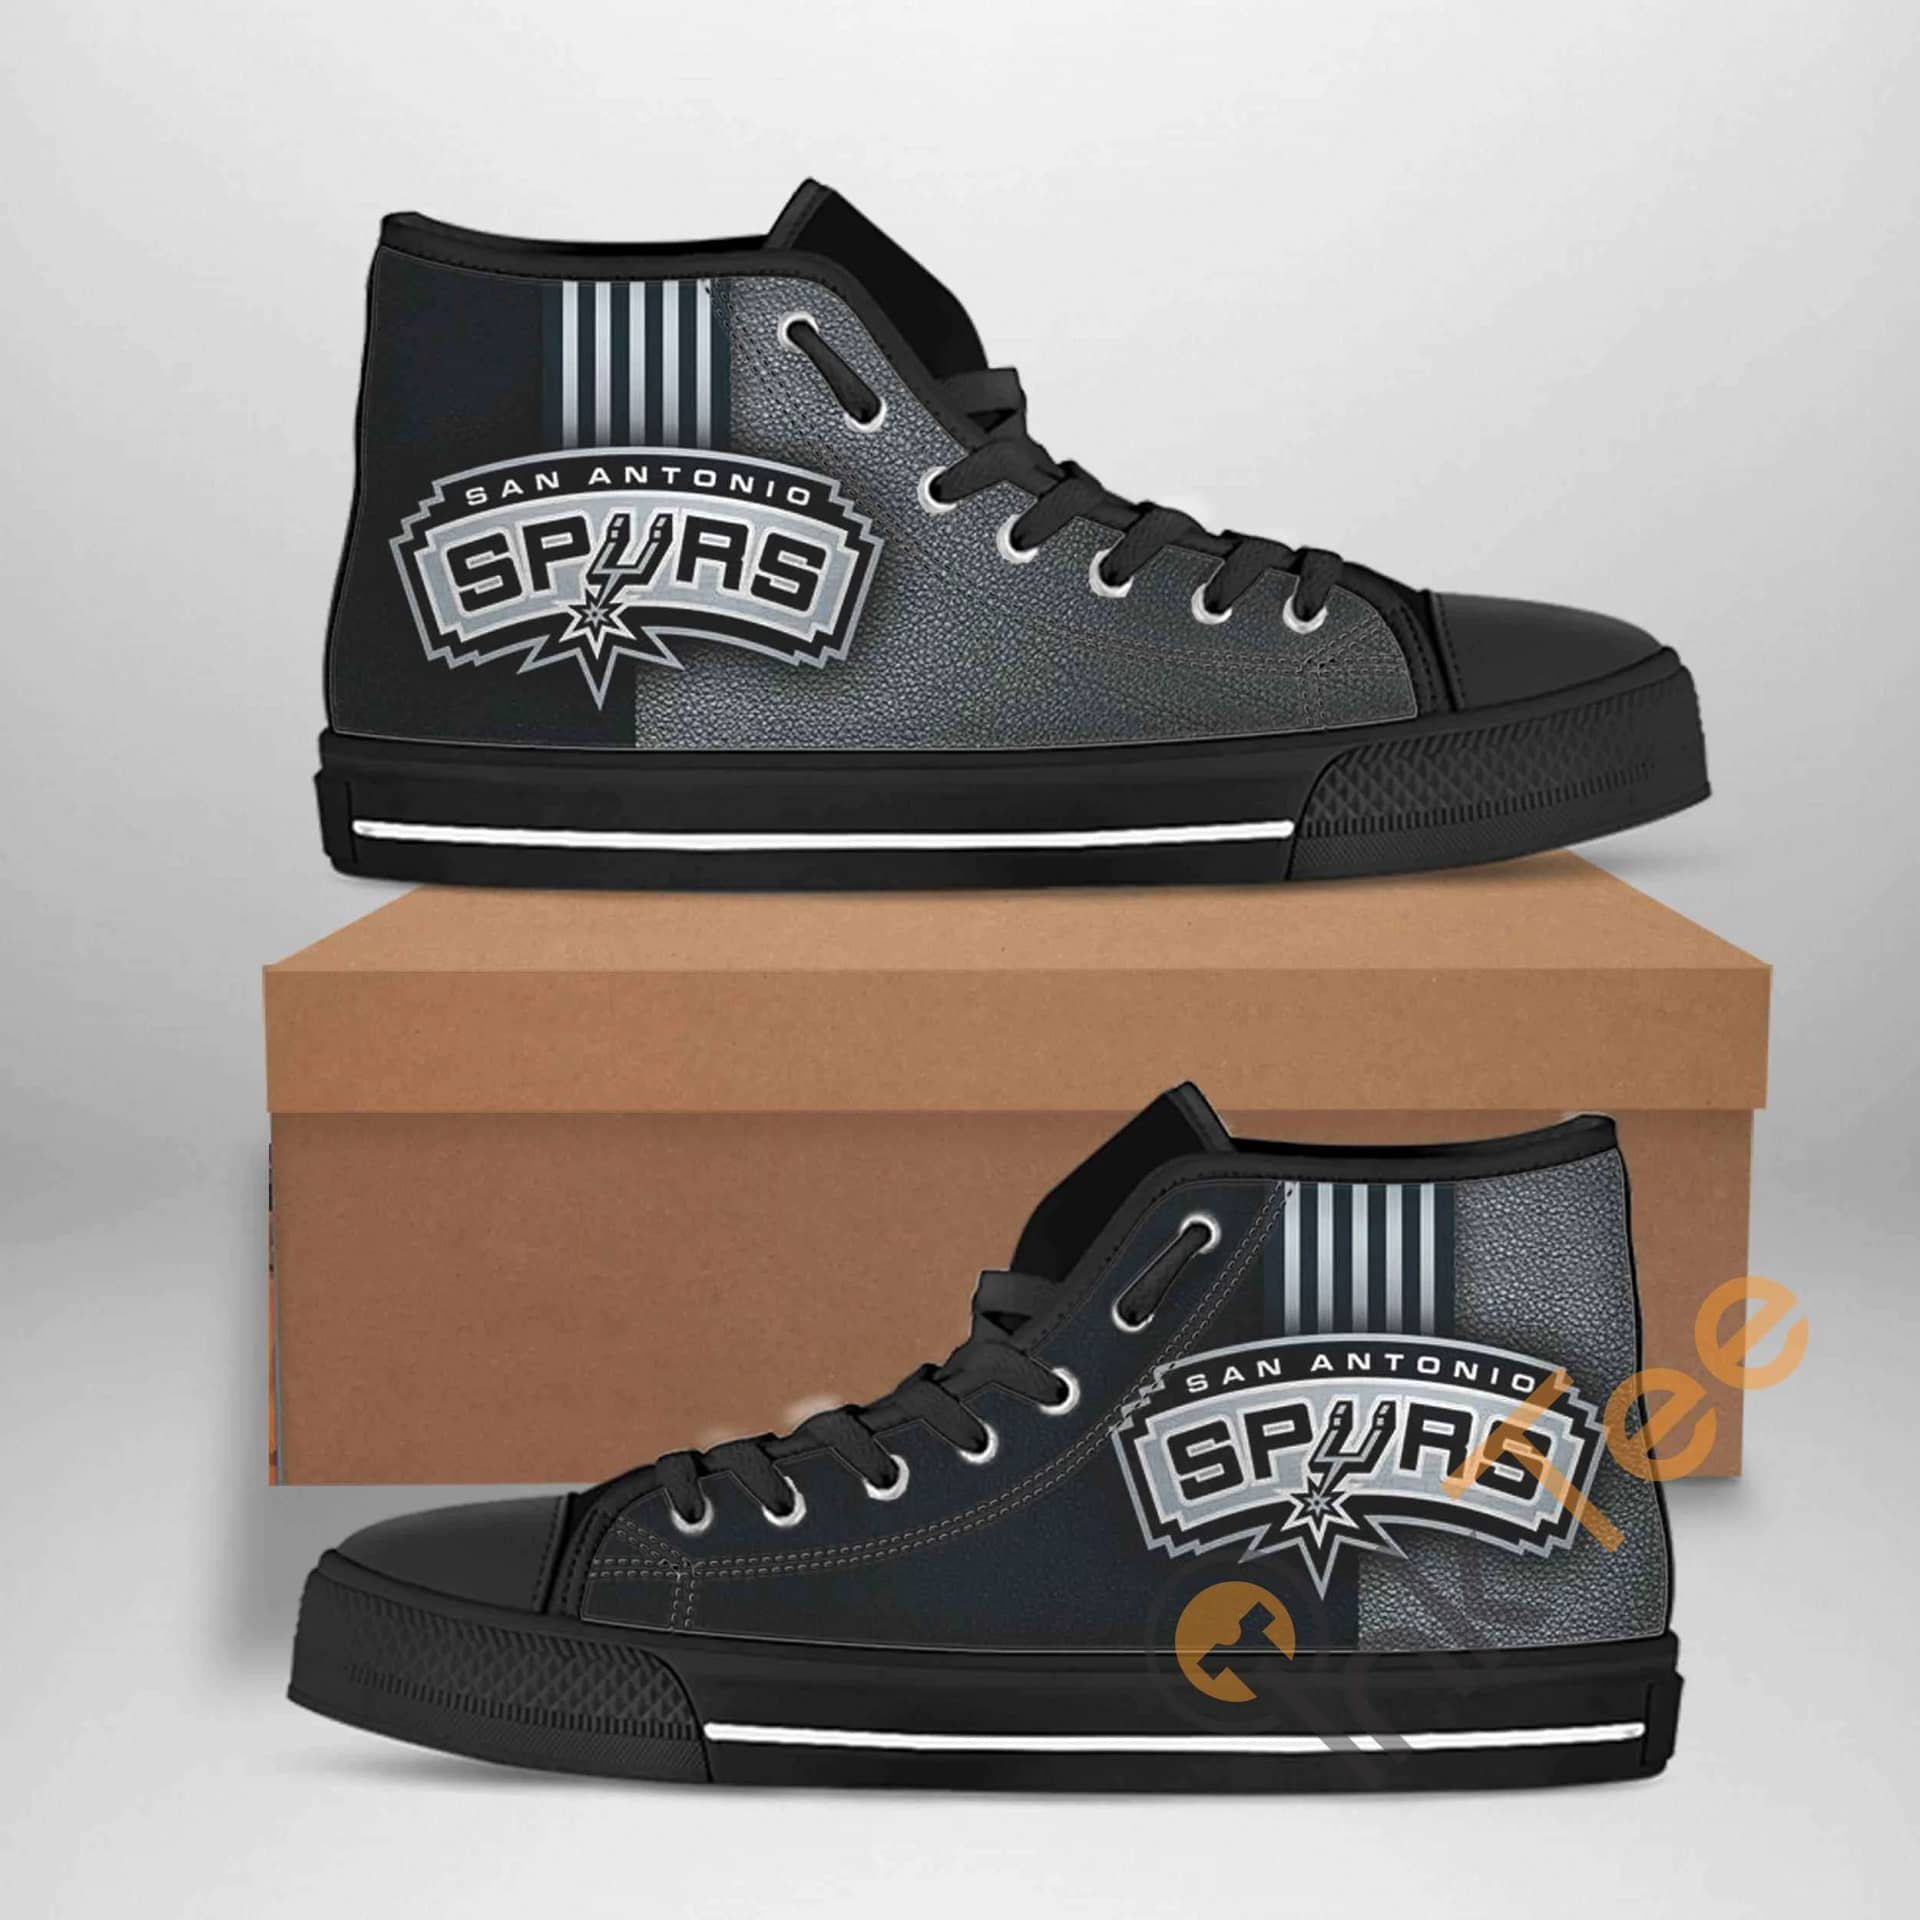 San Antonio Spurs Nba Basketball Amazon Best Seller Sku 2251 High Top Shoes